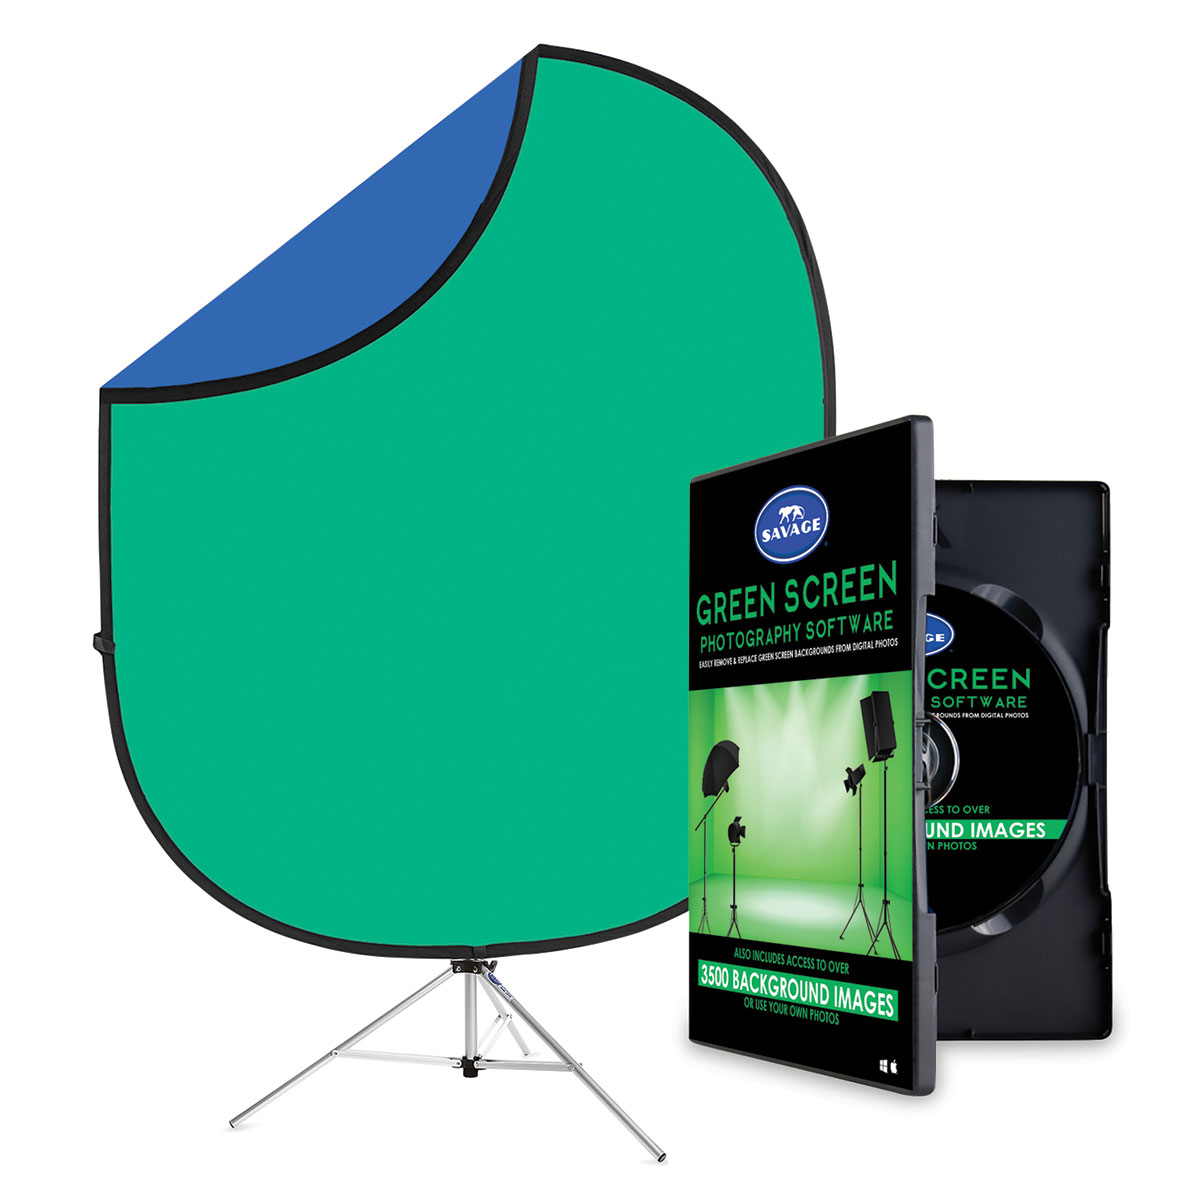 Savage Green Screen Photography - Green Screen Digital Photography Kit